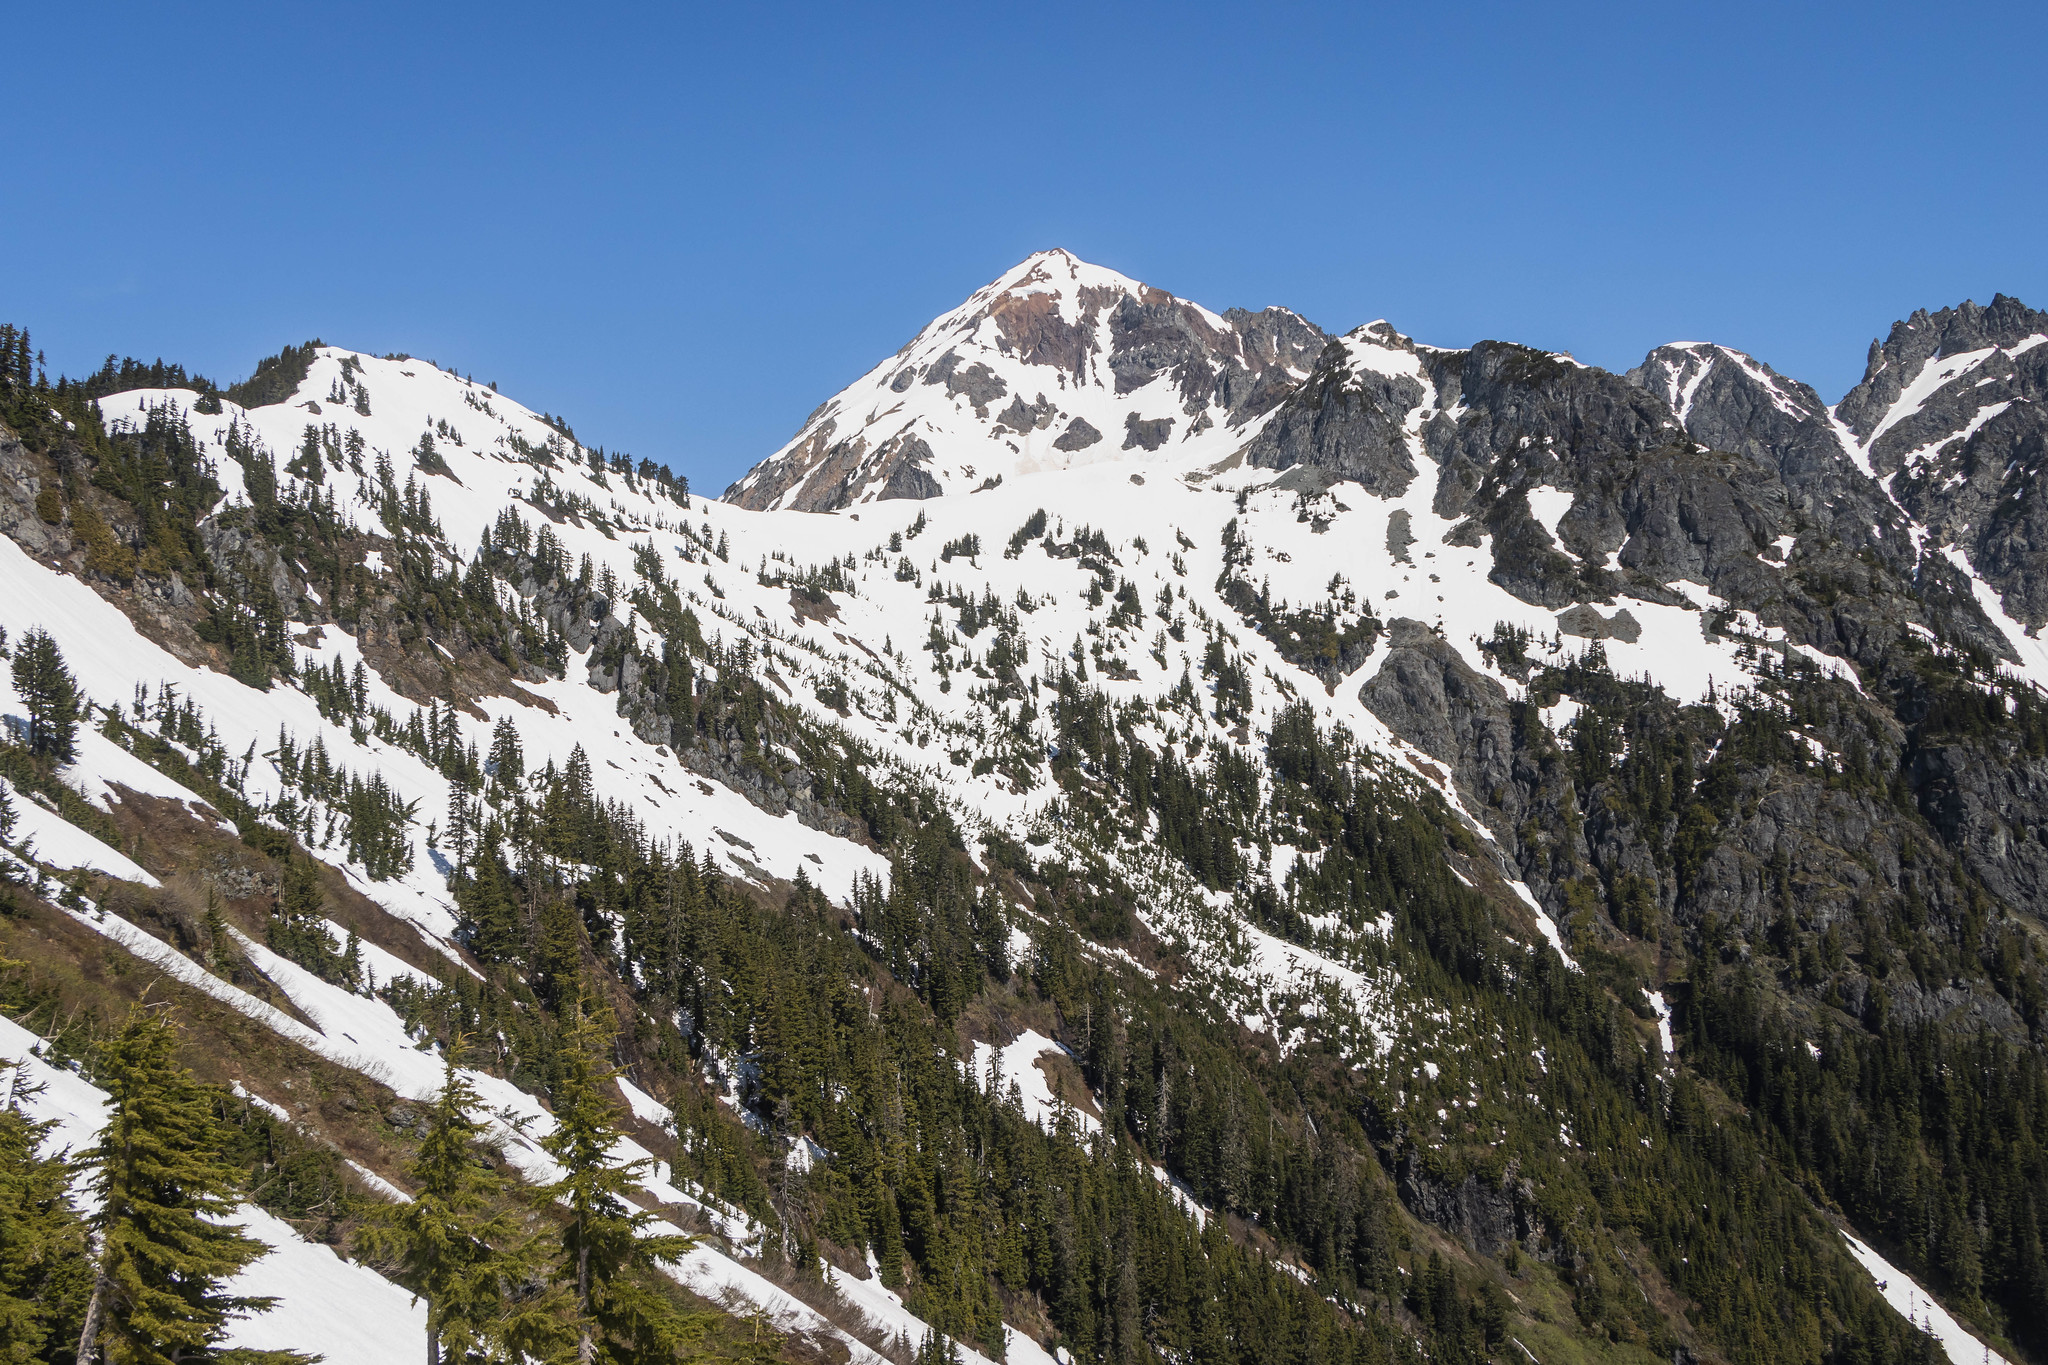 Aiming for High Pass below Mount Larrabee